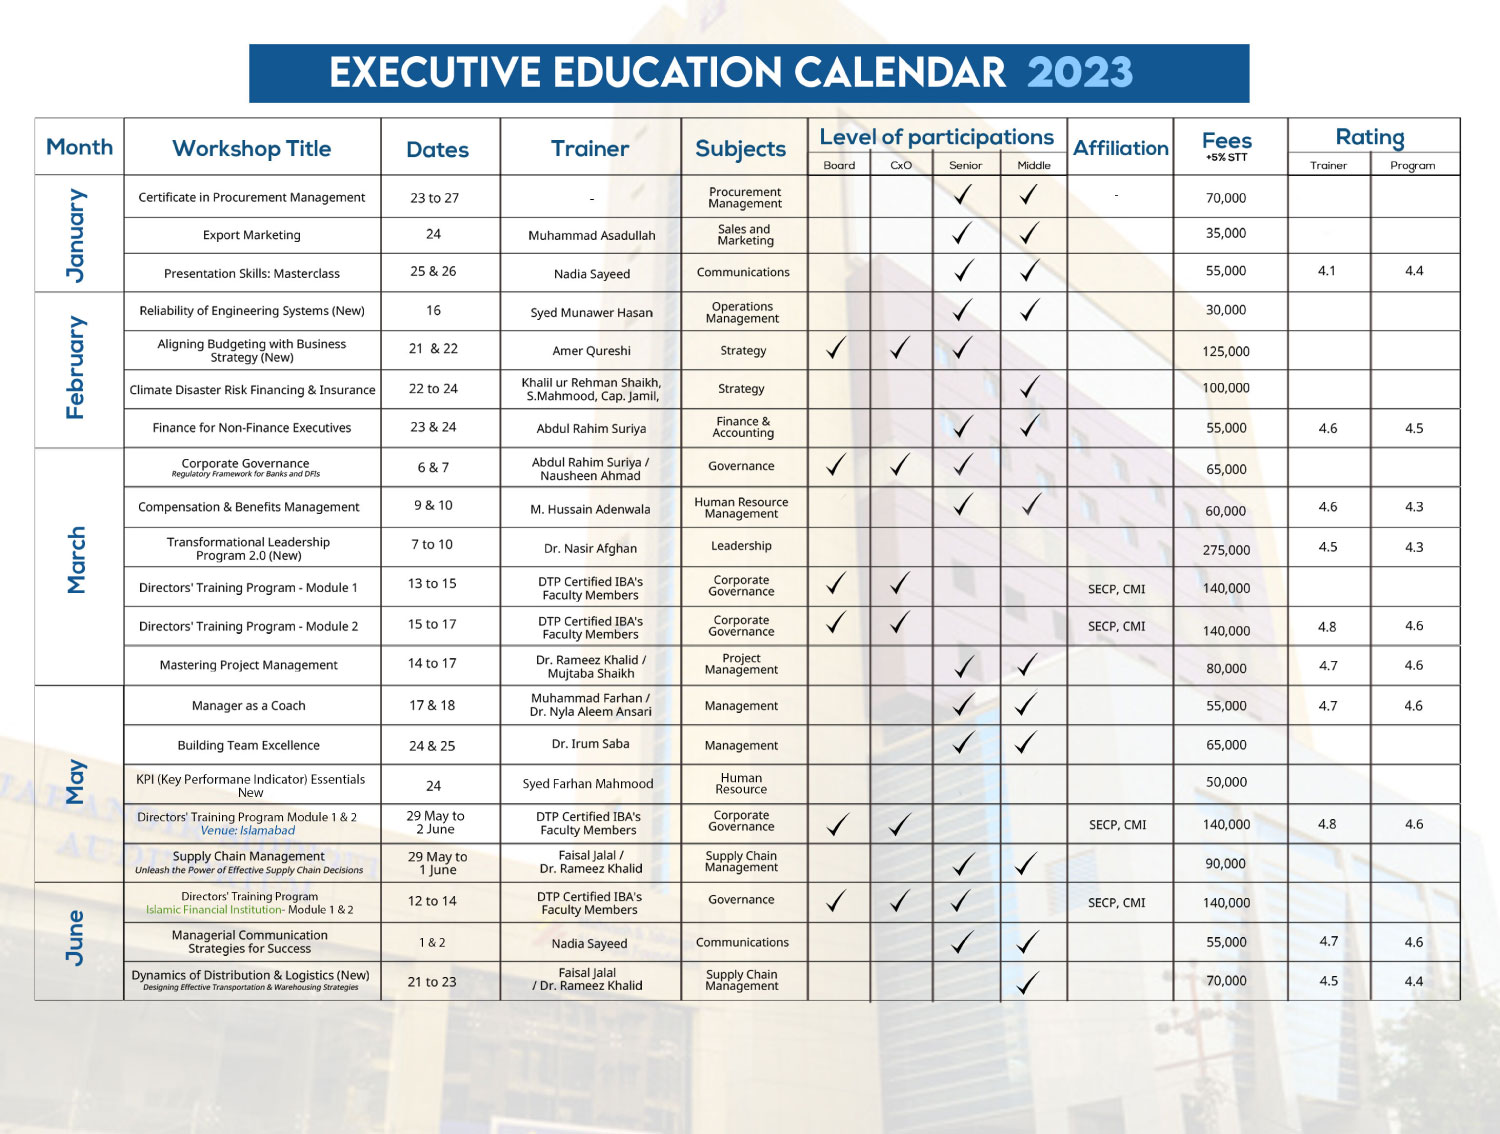 Program Calendar